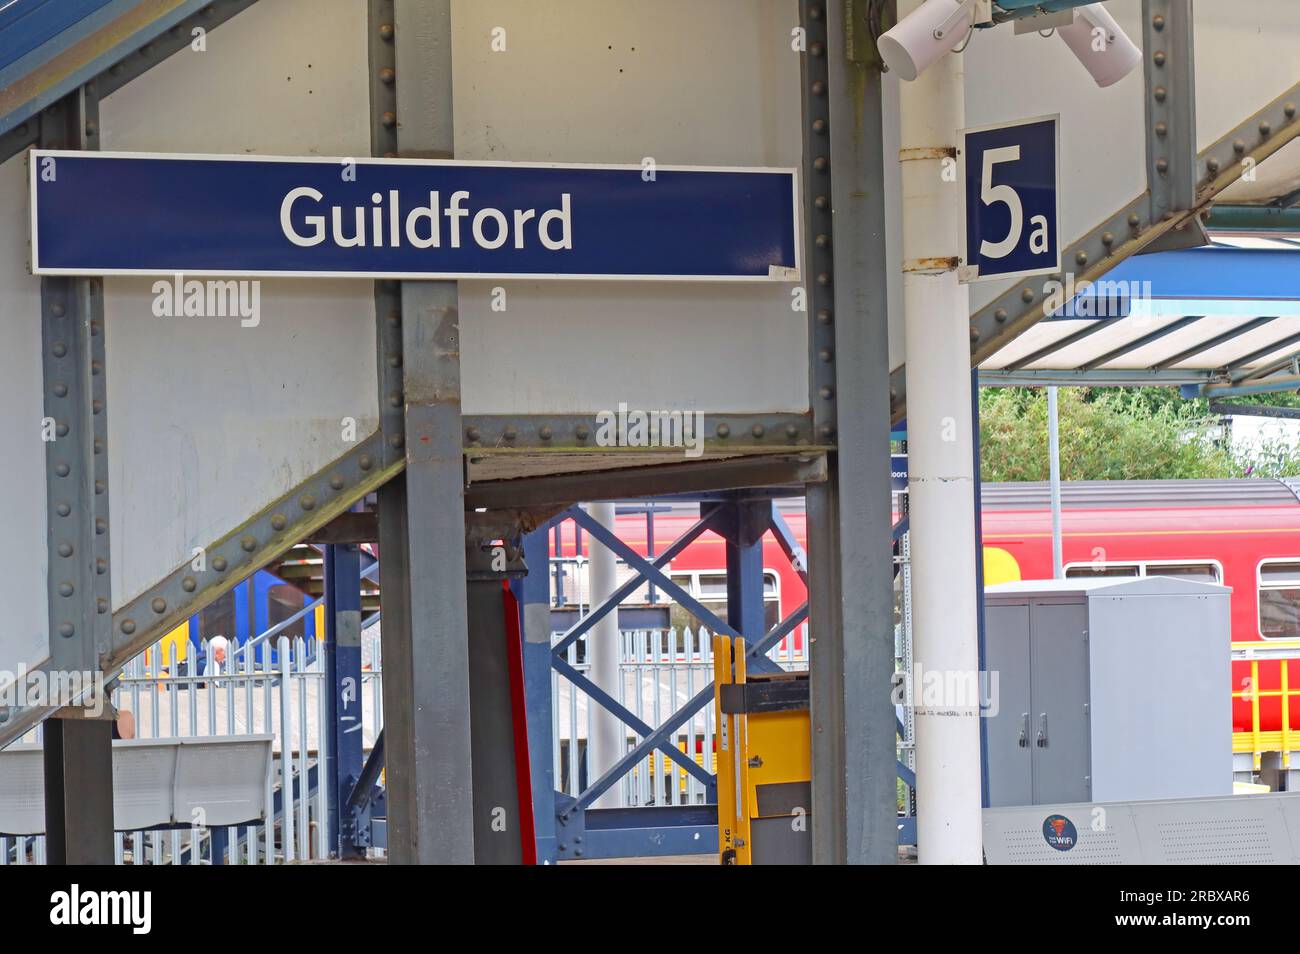 Guildford station, platform 5a, Surrey, England, UK, GU1 4UT Stock Photo